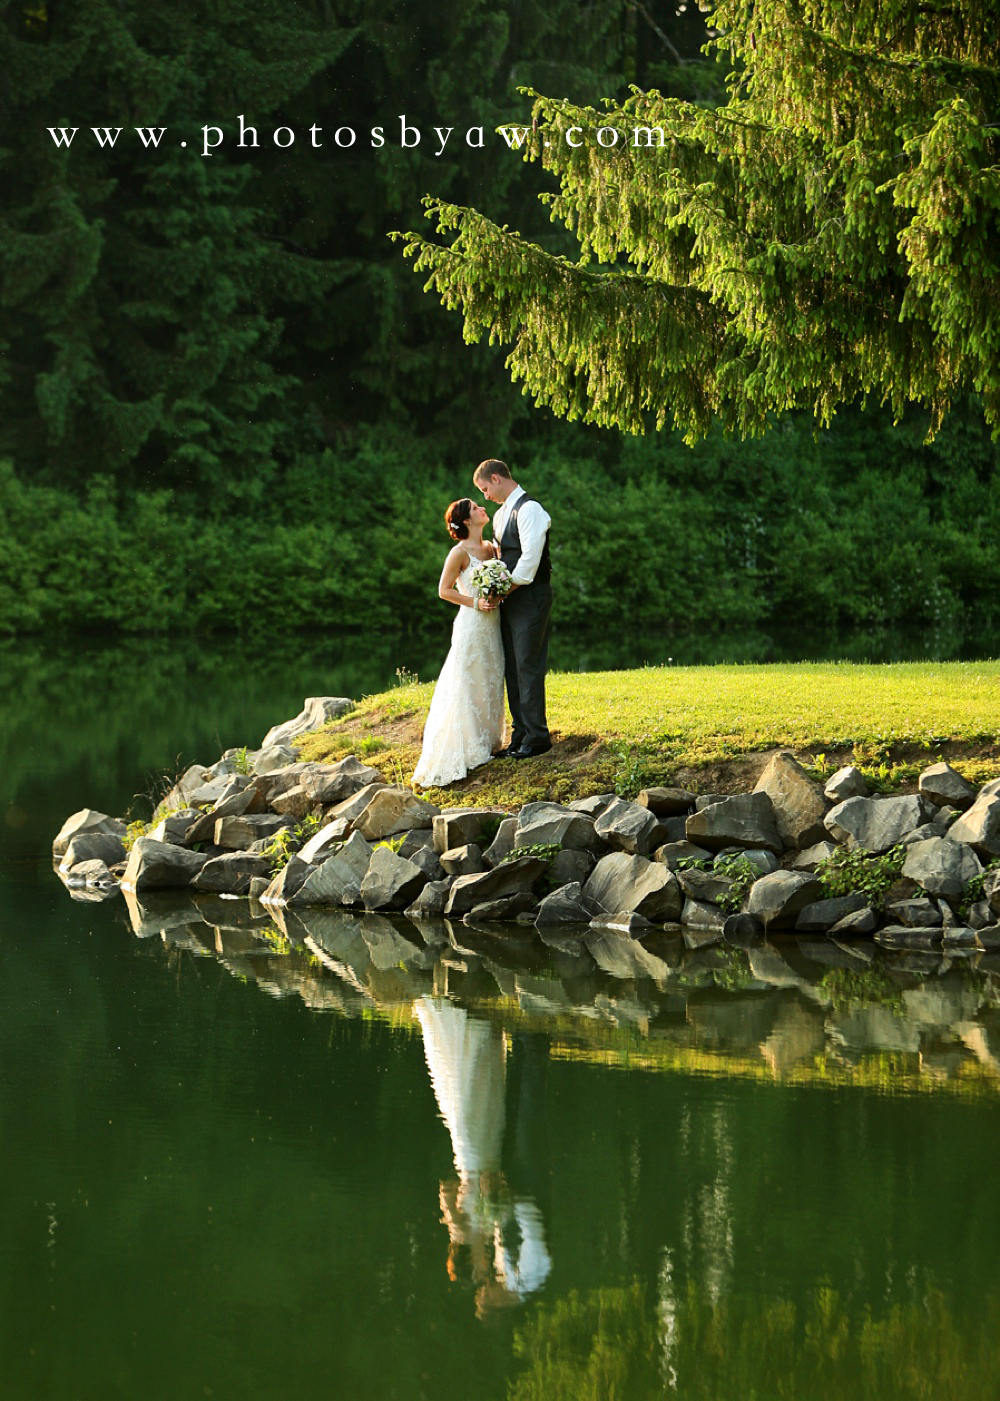 Susan & Chris | Laurel Highlands Wedding at Penn Scenic View